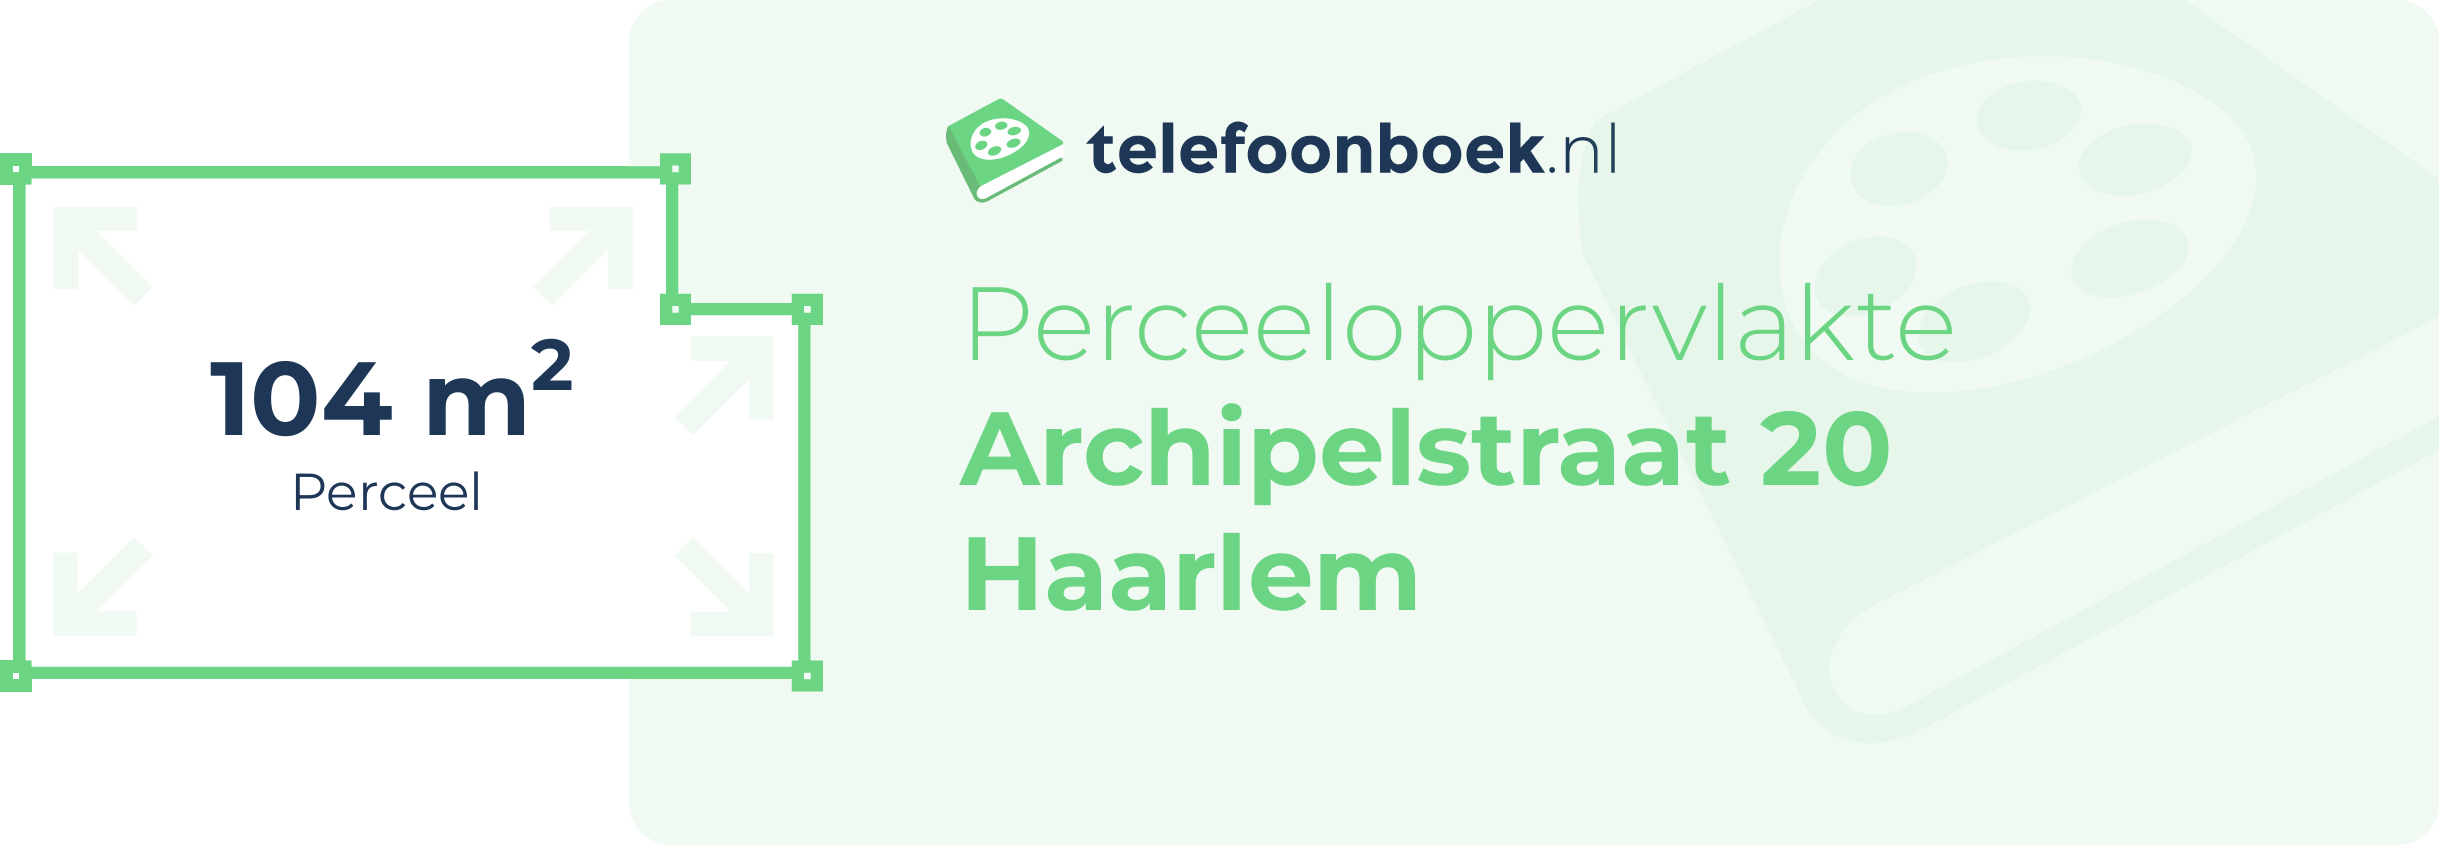 Perceeloppervlakte Archipelstraat 20 Haarlem